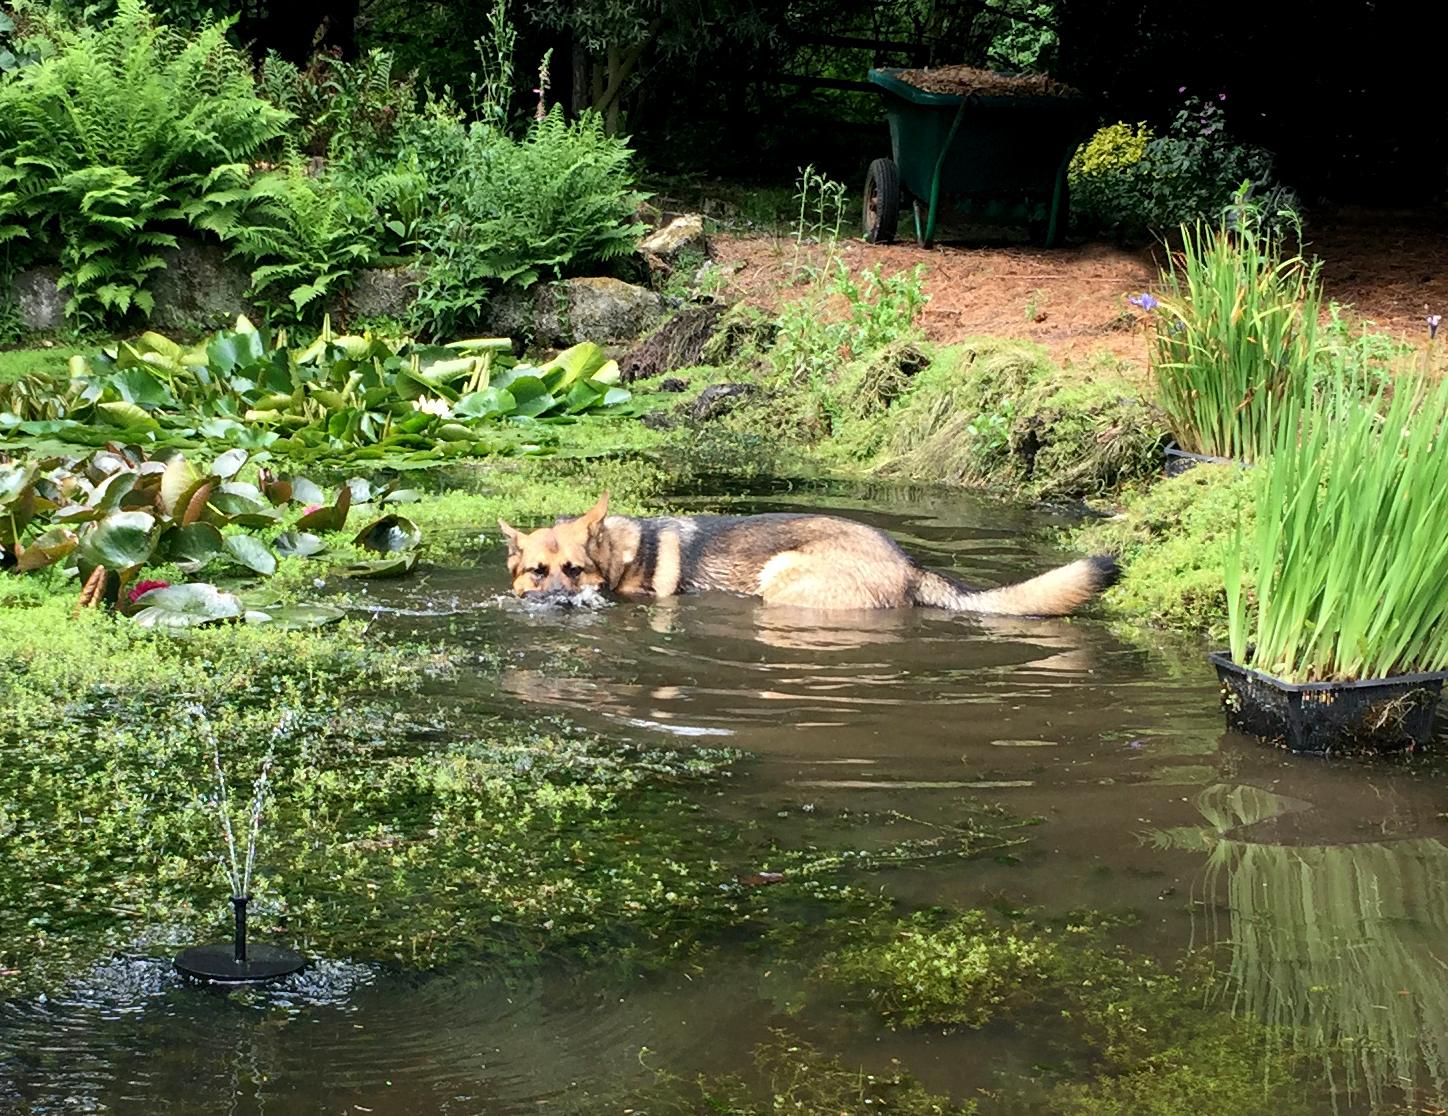 Finn dog in pond